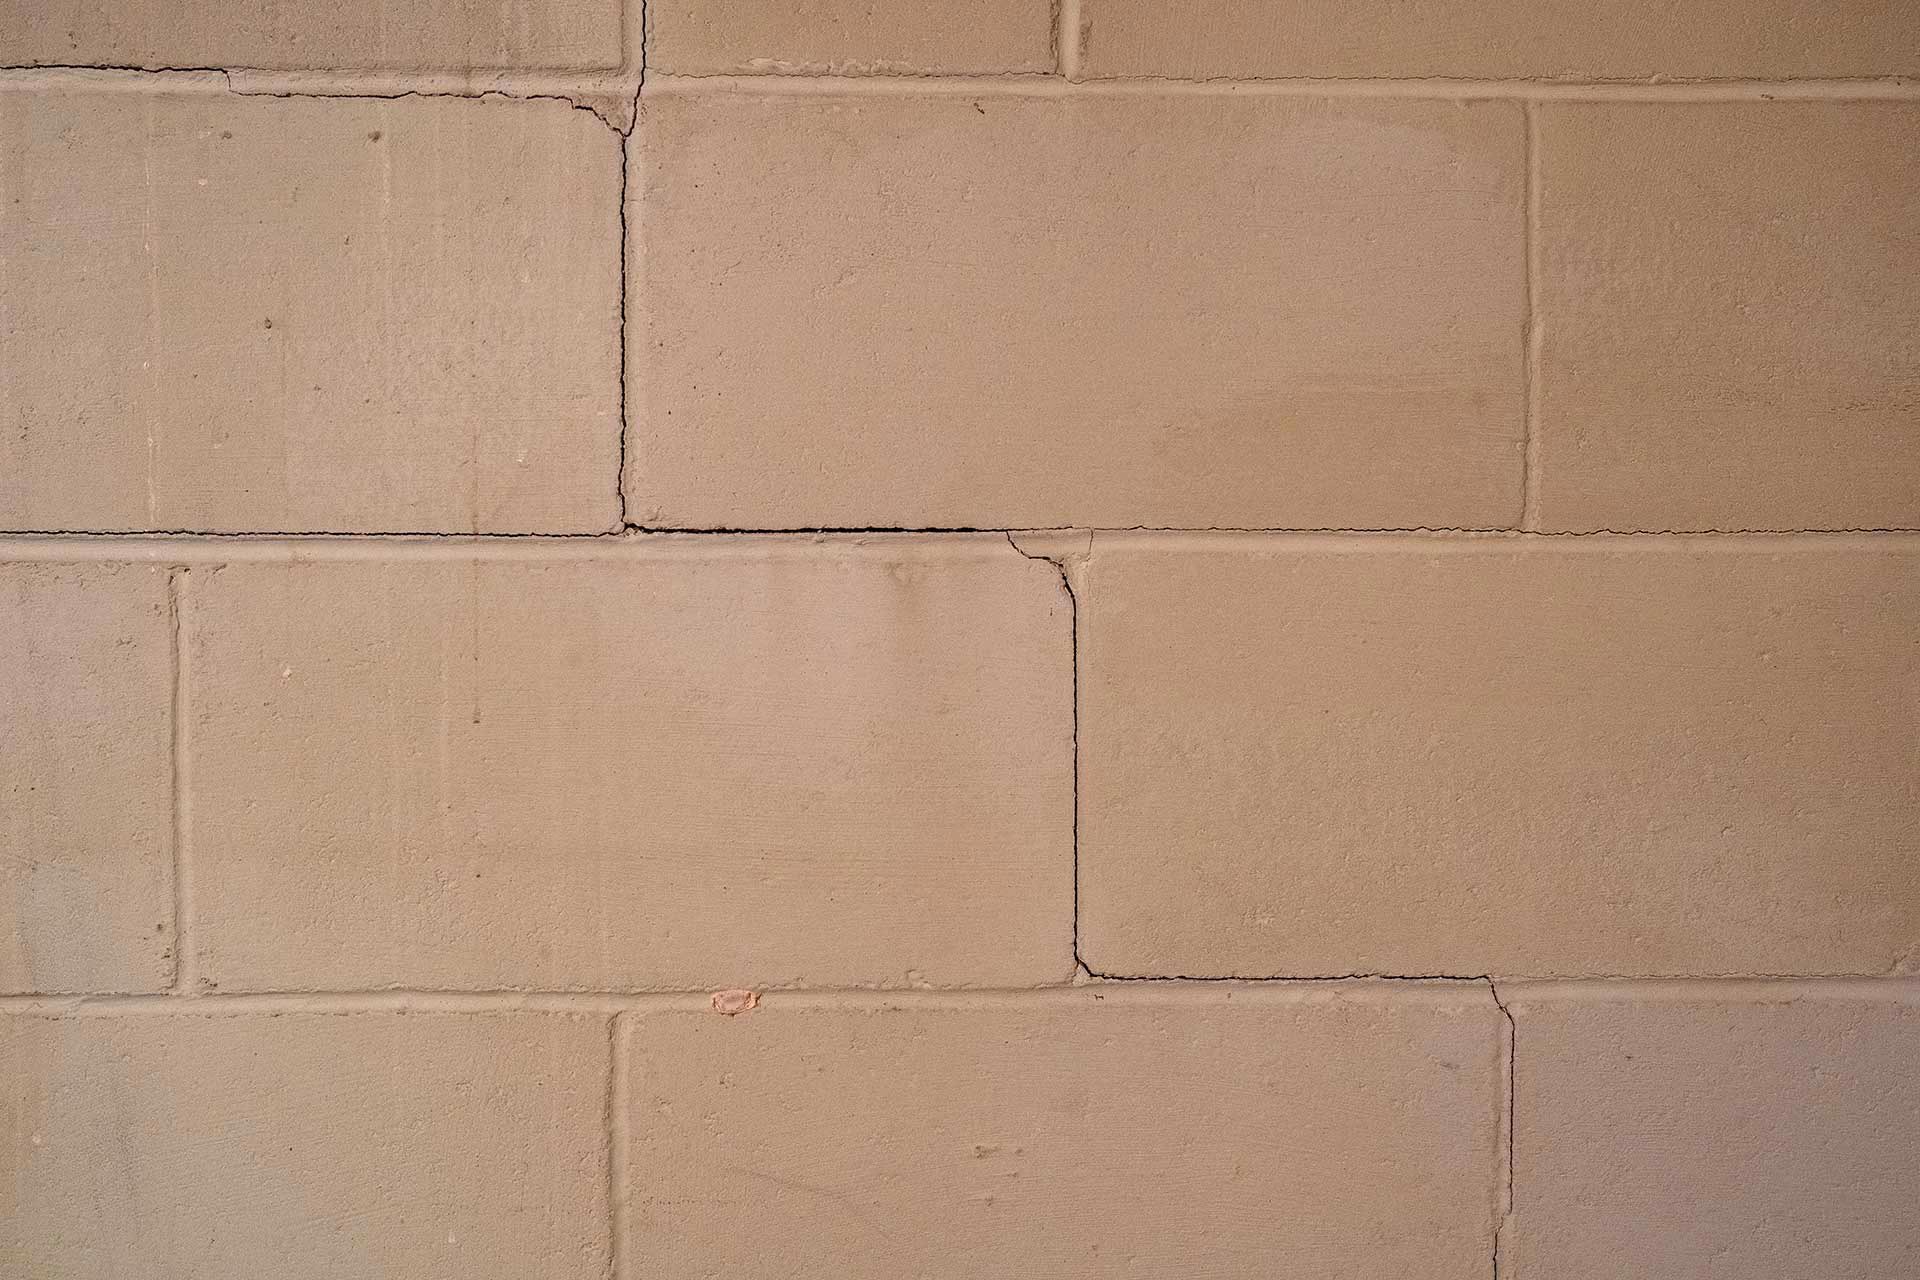 Cracking Block Wall